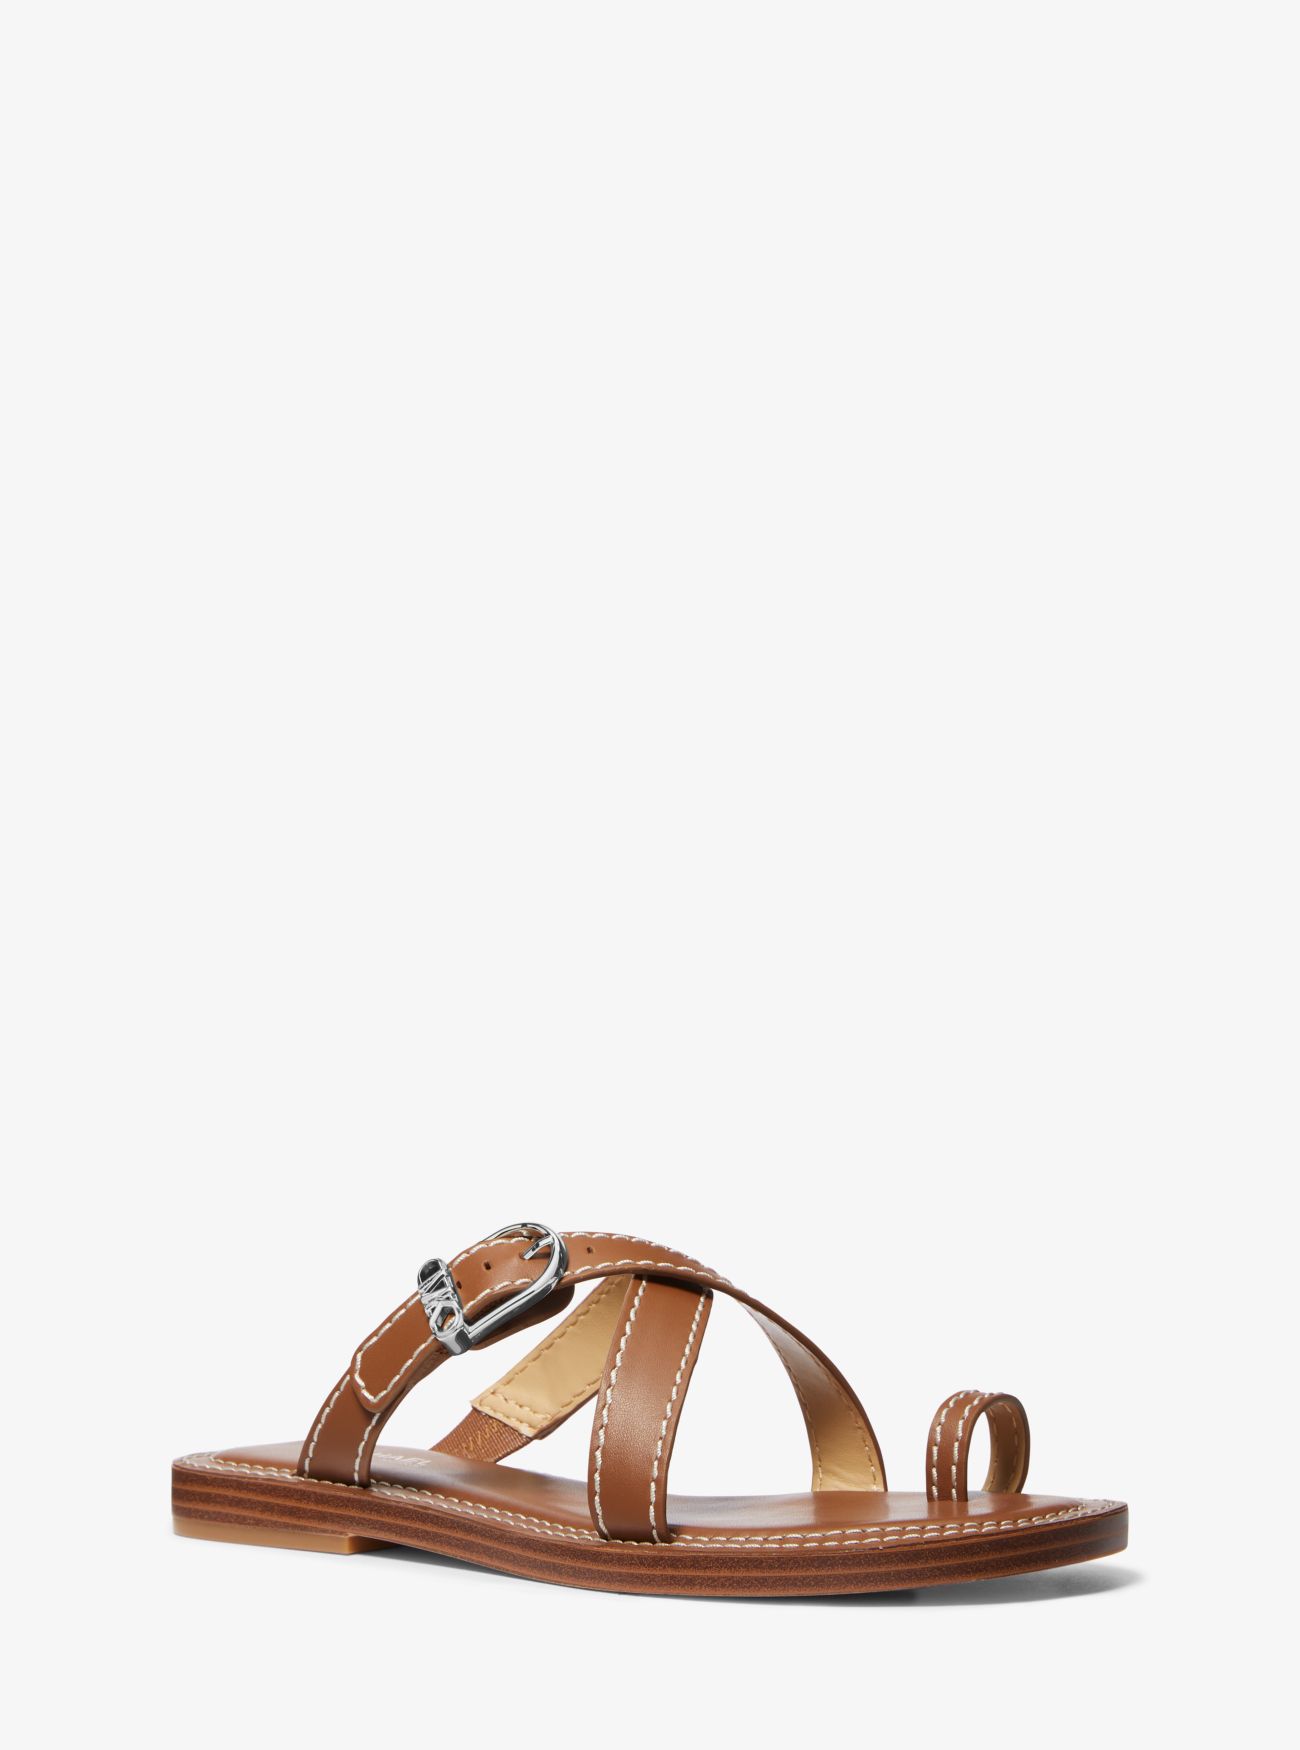 MK Ashton Leather Flat Sandal - Luggage Brown - Michael Kors